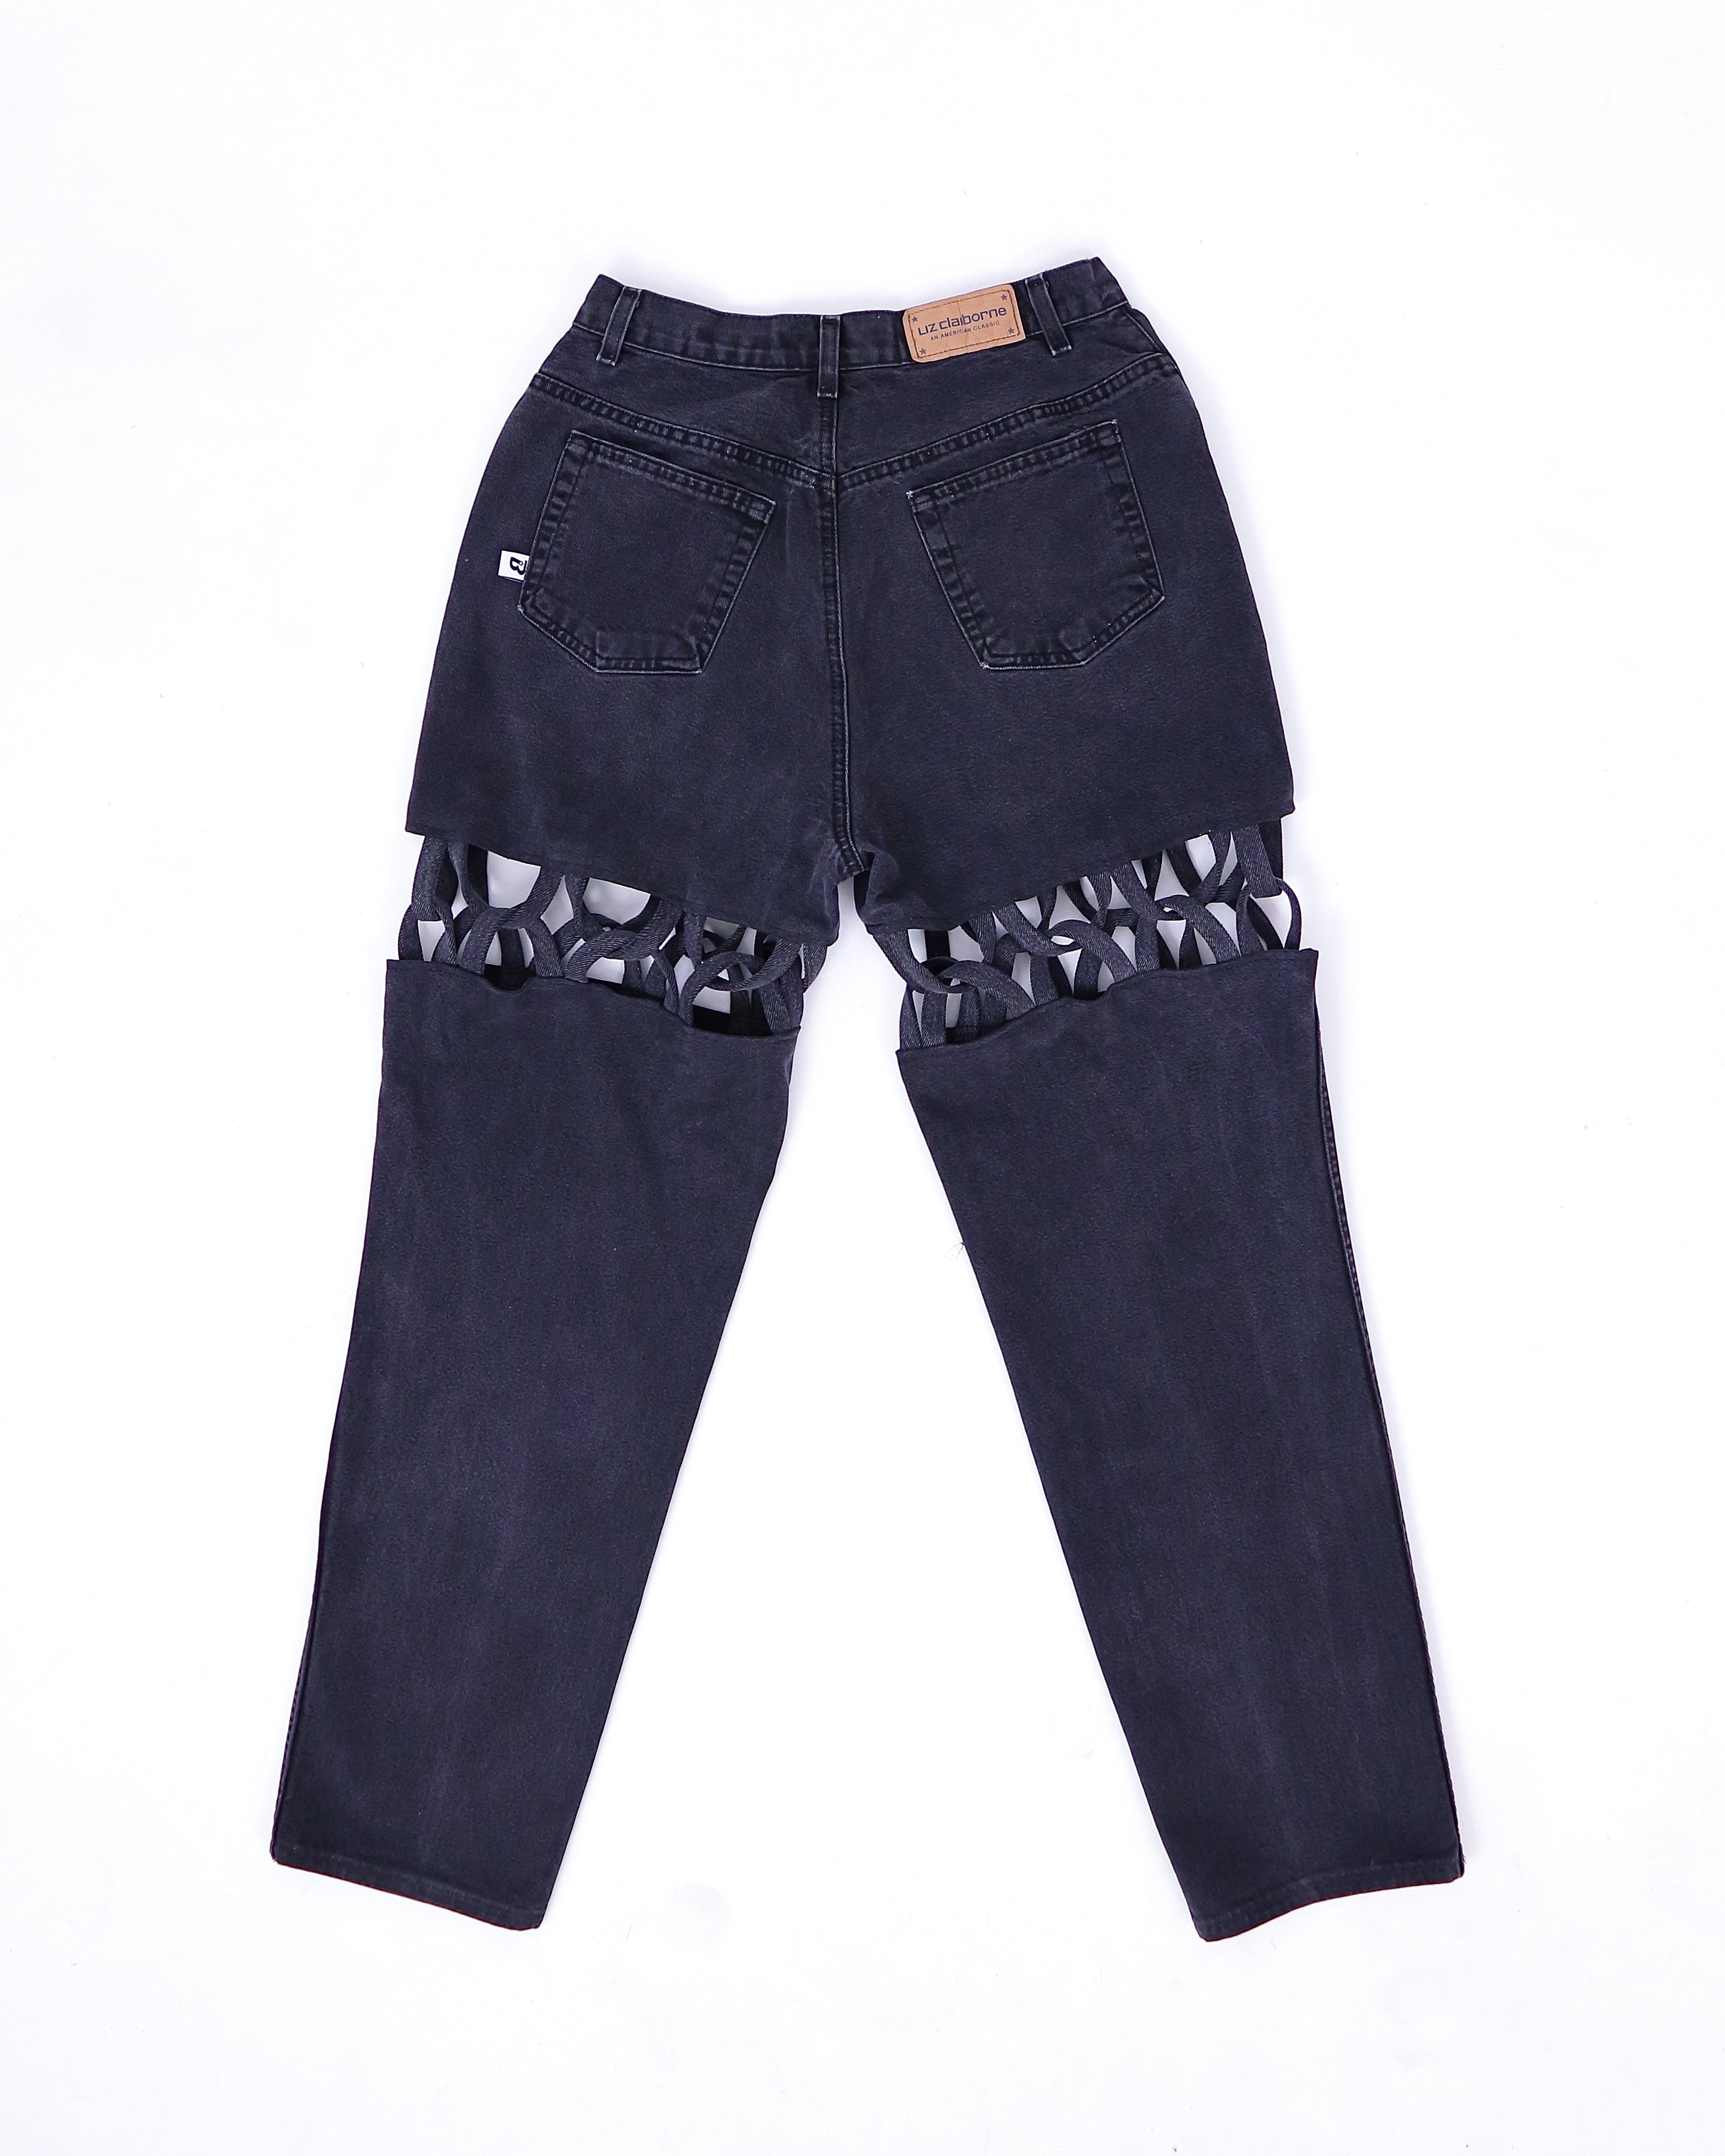 Criss Cross Jeans - Black (Medium)